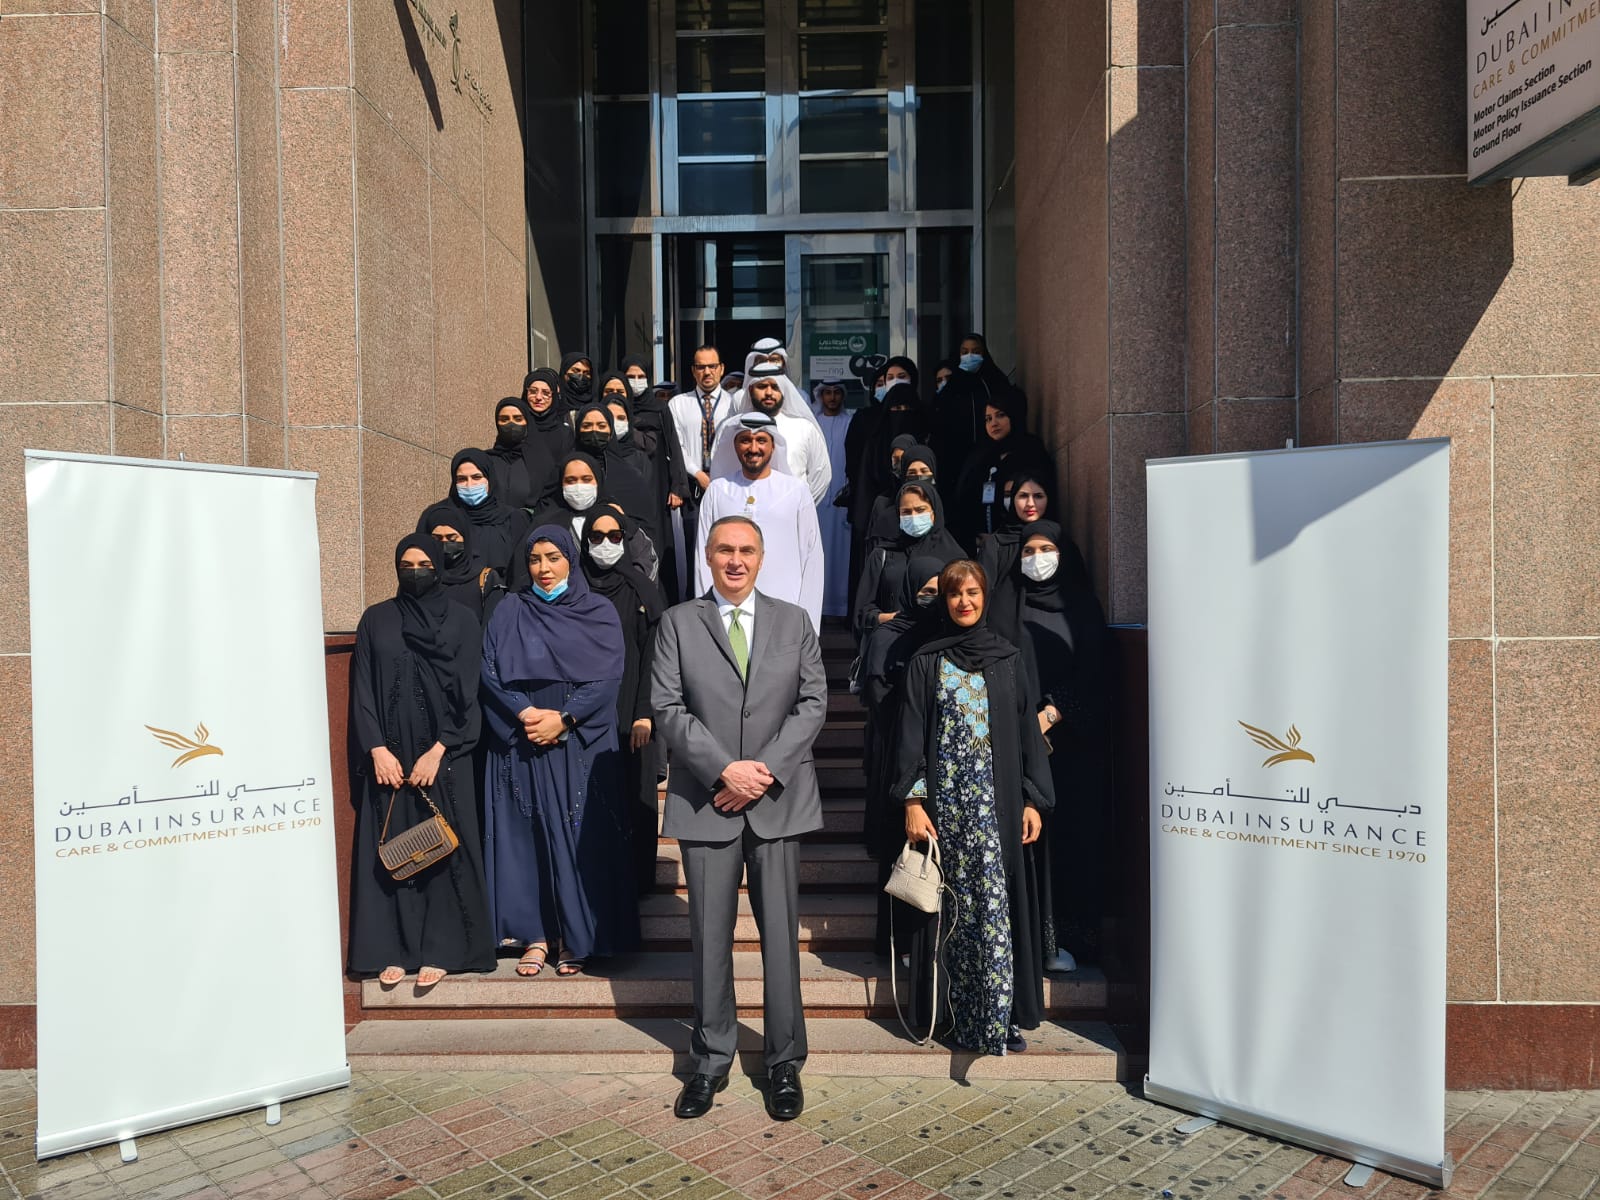 Dubai Insurance Co. Leads Emiratisation Efforts: